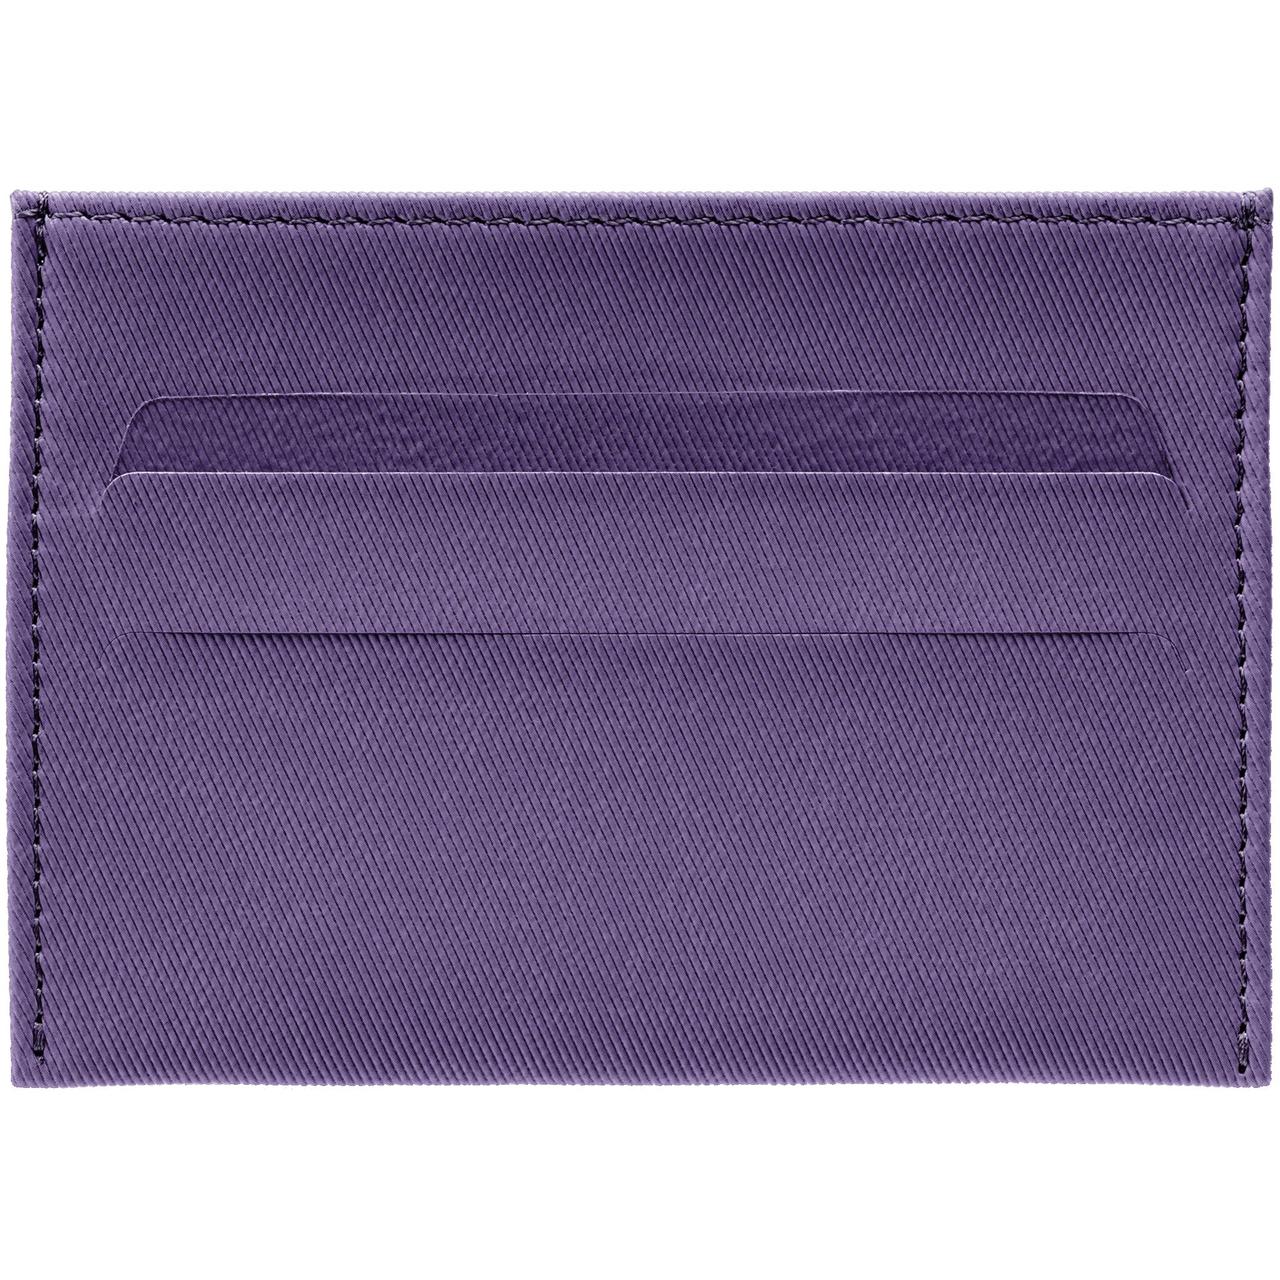 Чехол для карточек Twill, фиолетовый (артикул 66399.77)